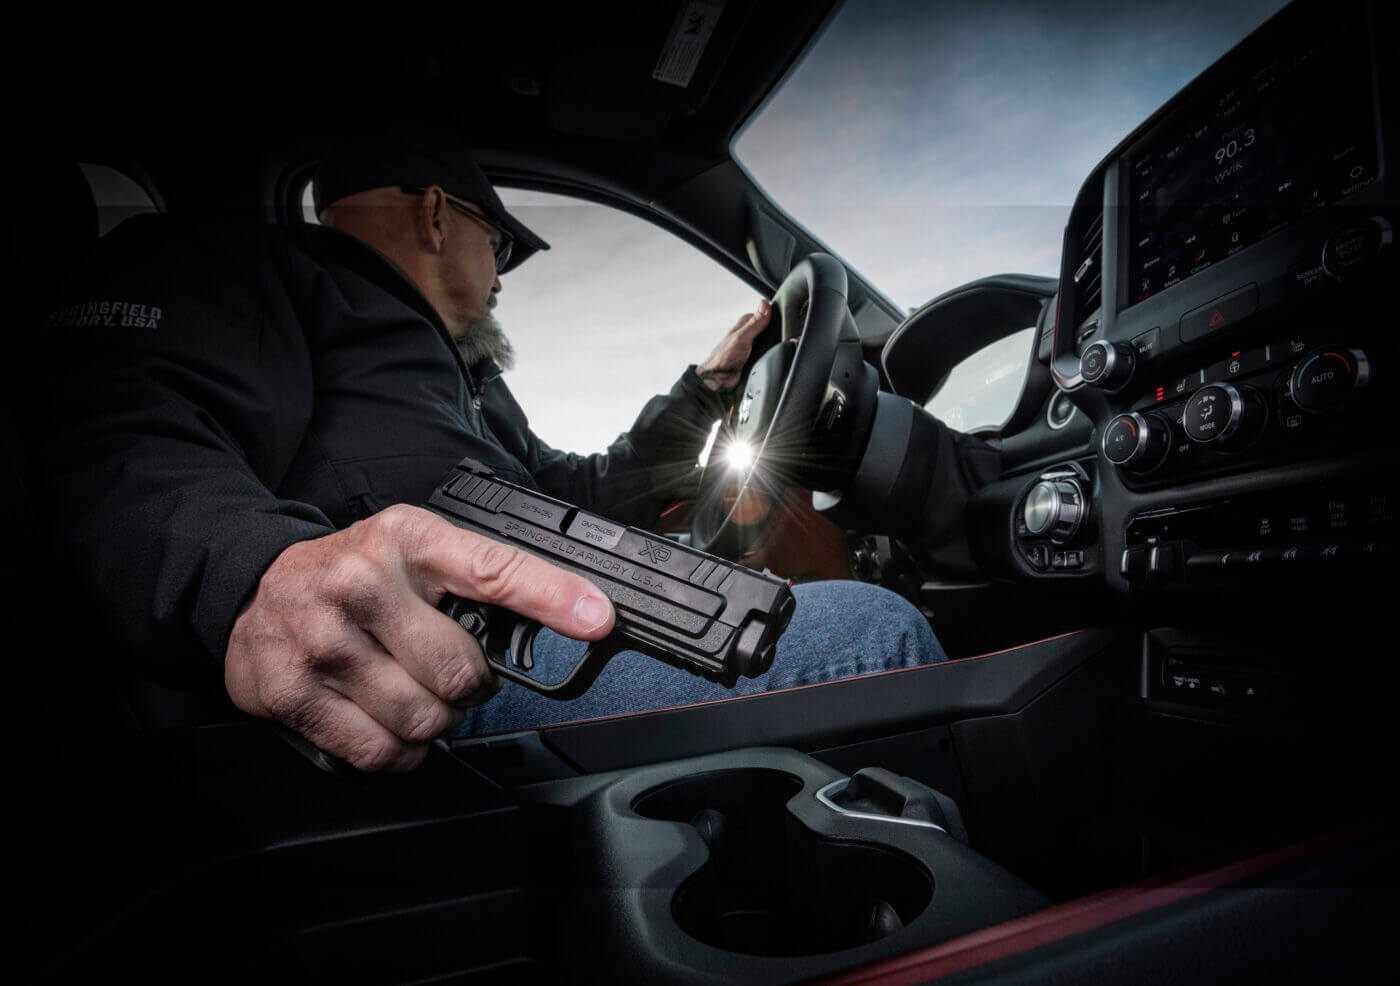 Storing a gun in a car